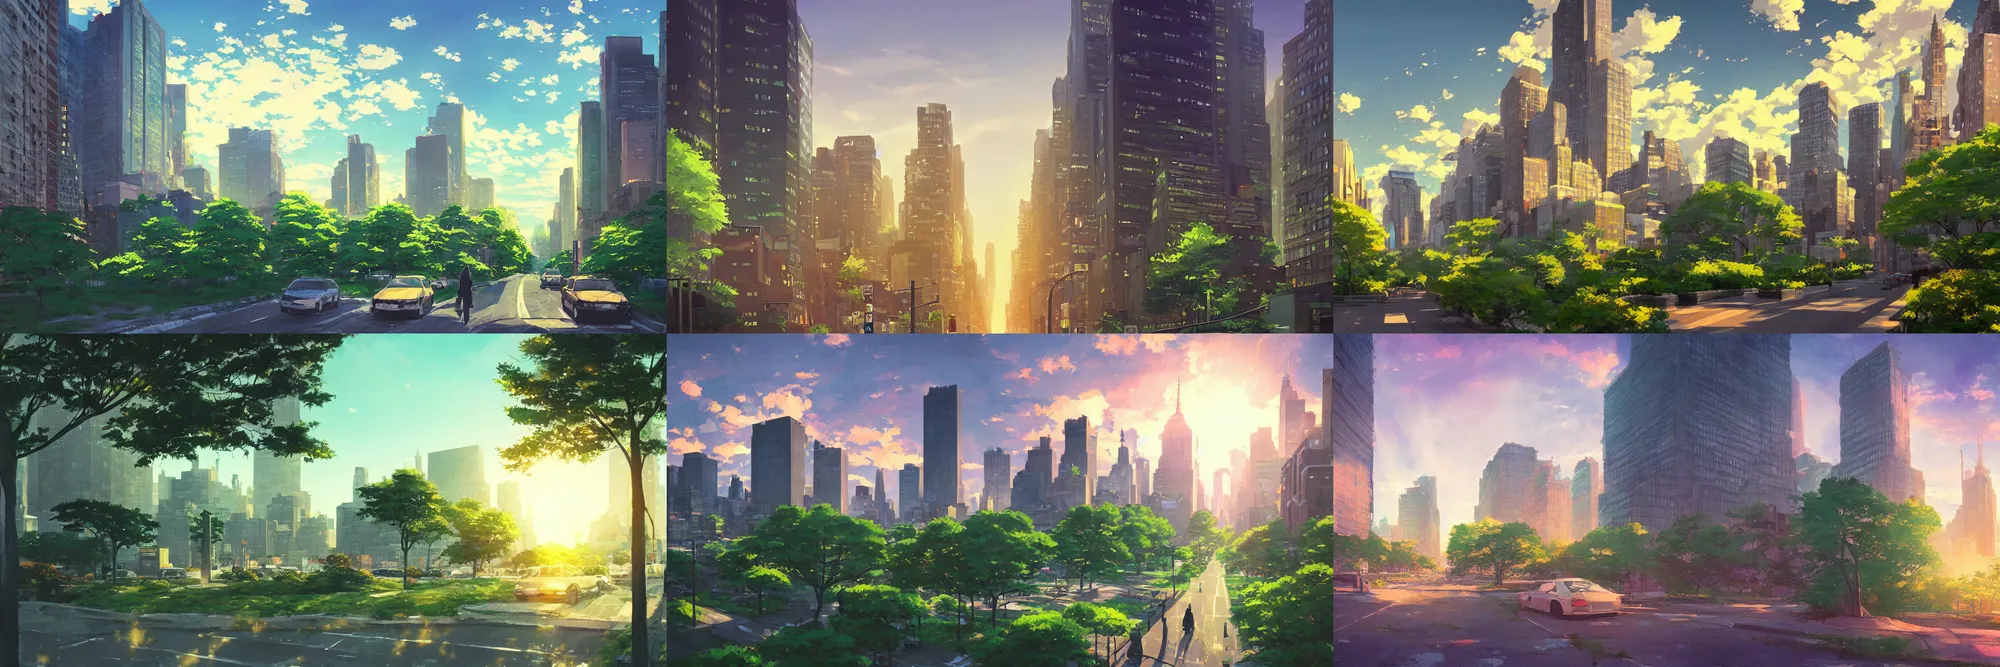 Prompt: dream fantasy new york city, more greens, lanscape, modern, sunset, dusk, perspective, street view, art by makoto shinkai